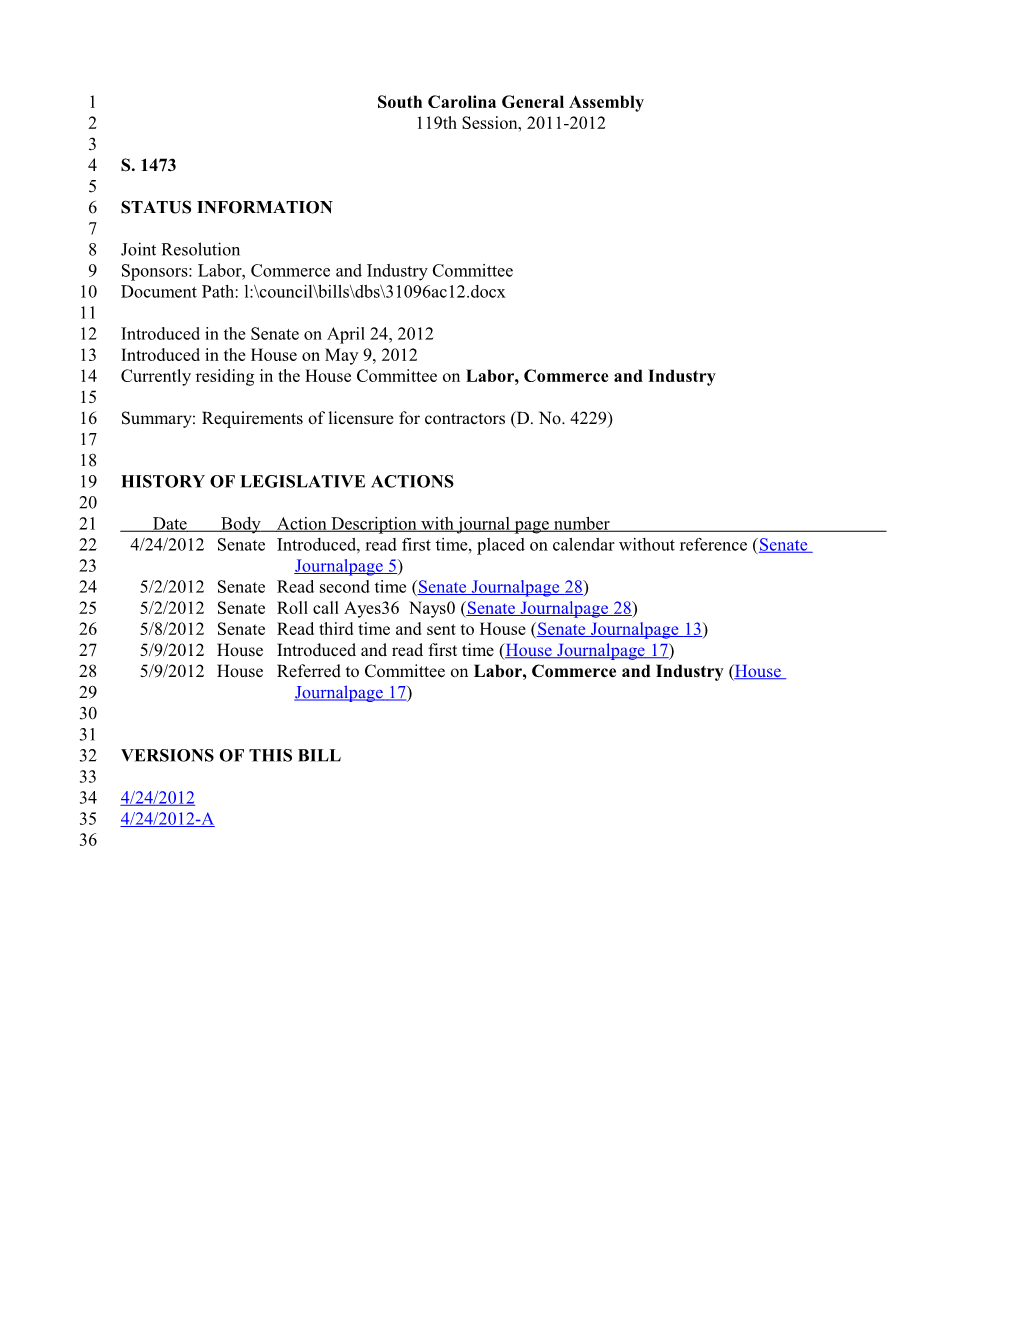 2011-2012 Bill 1473: Requirements of Licensure for Contractors (D. No. 4229) - South Carolina